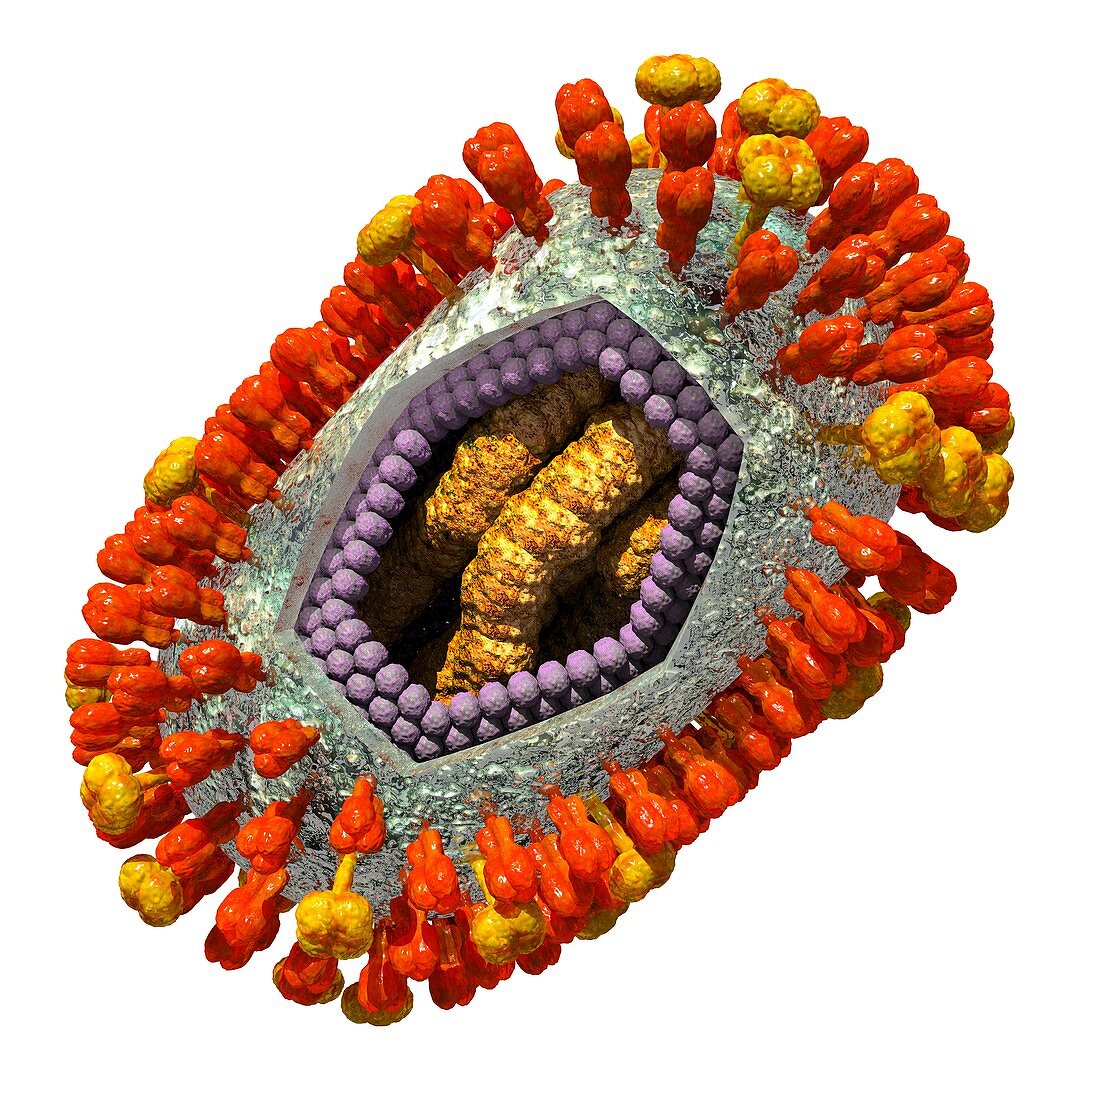 Influenza virus,artwork